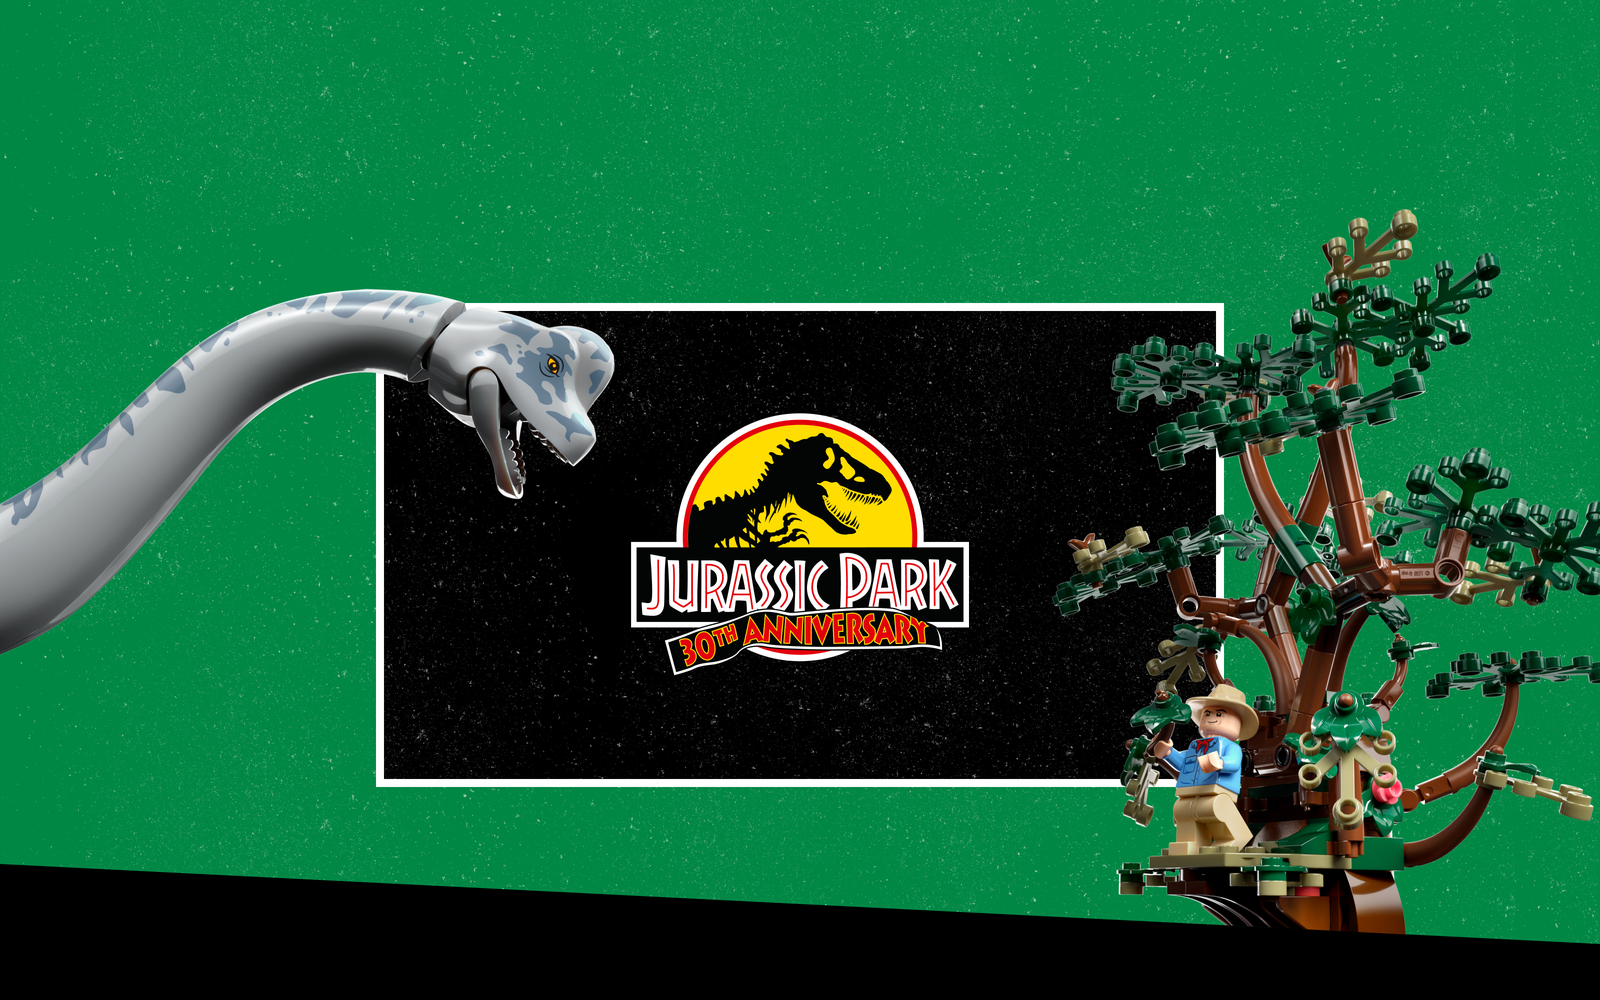 LEGO® Jurassic World™